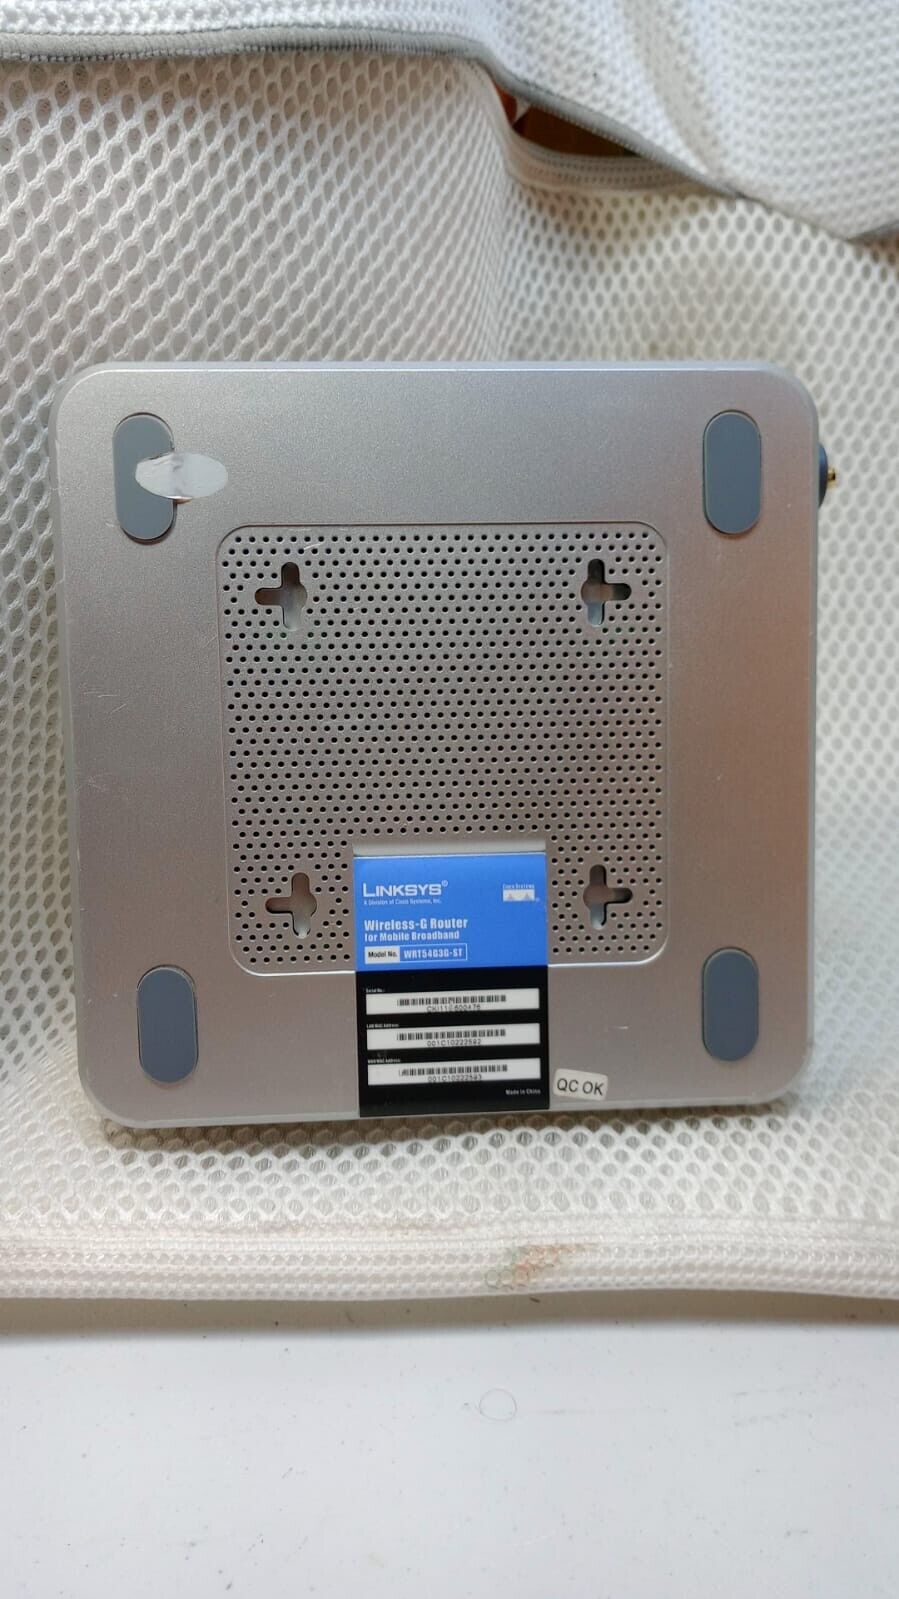 Linksys Vonage WRTP54G 3 Mbps 4-Port 10/100 Wireless G Router